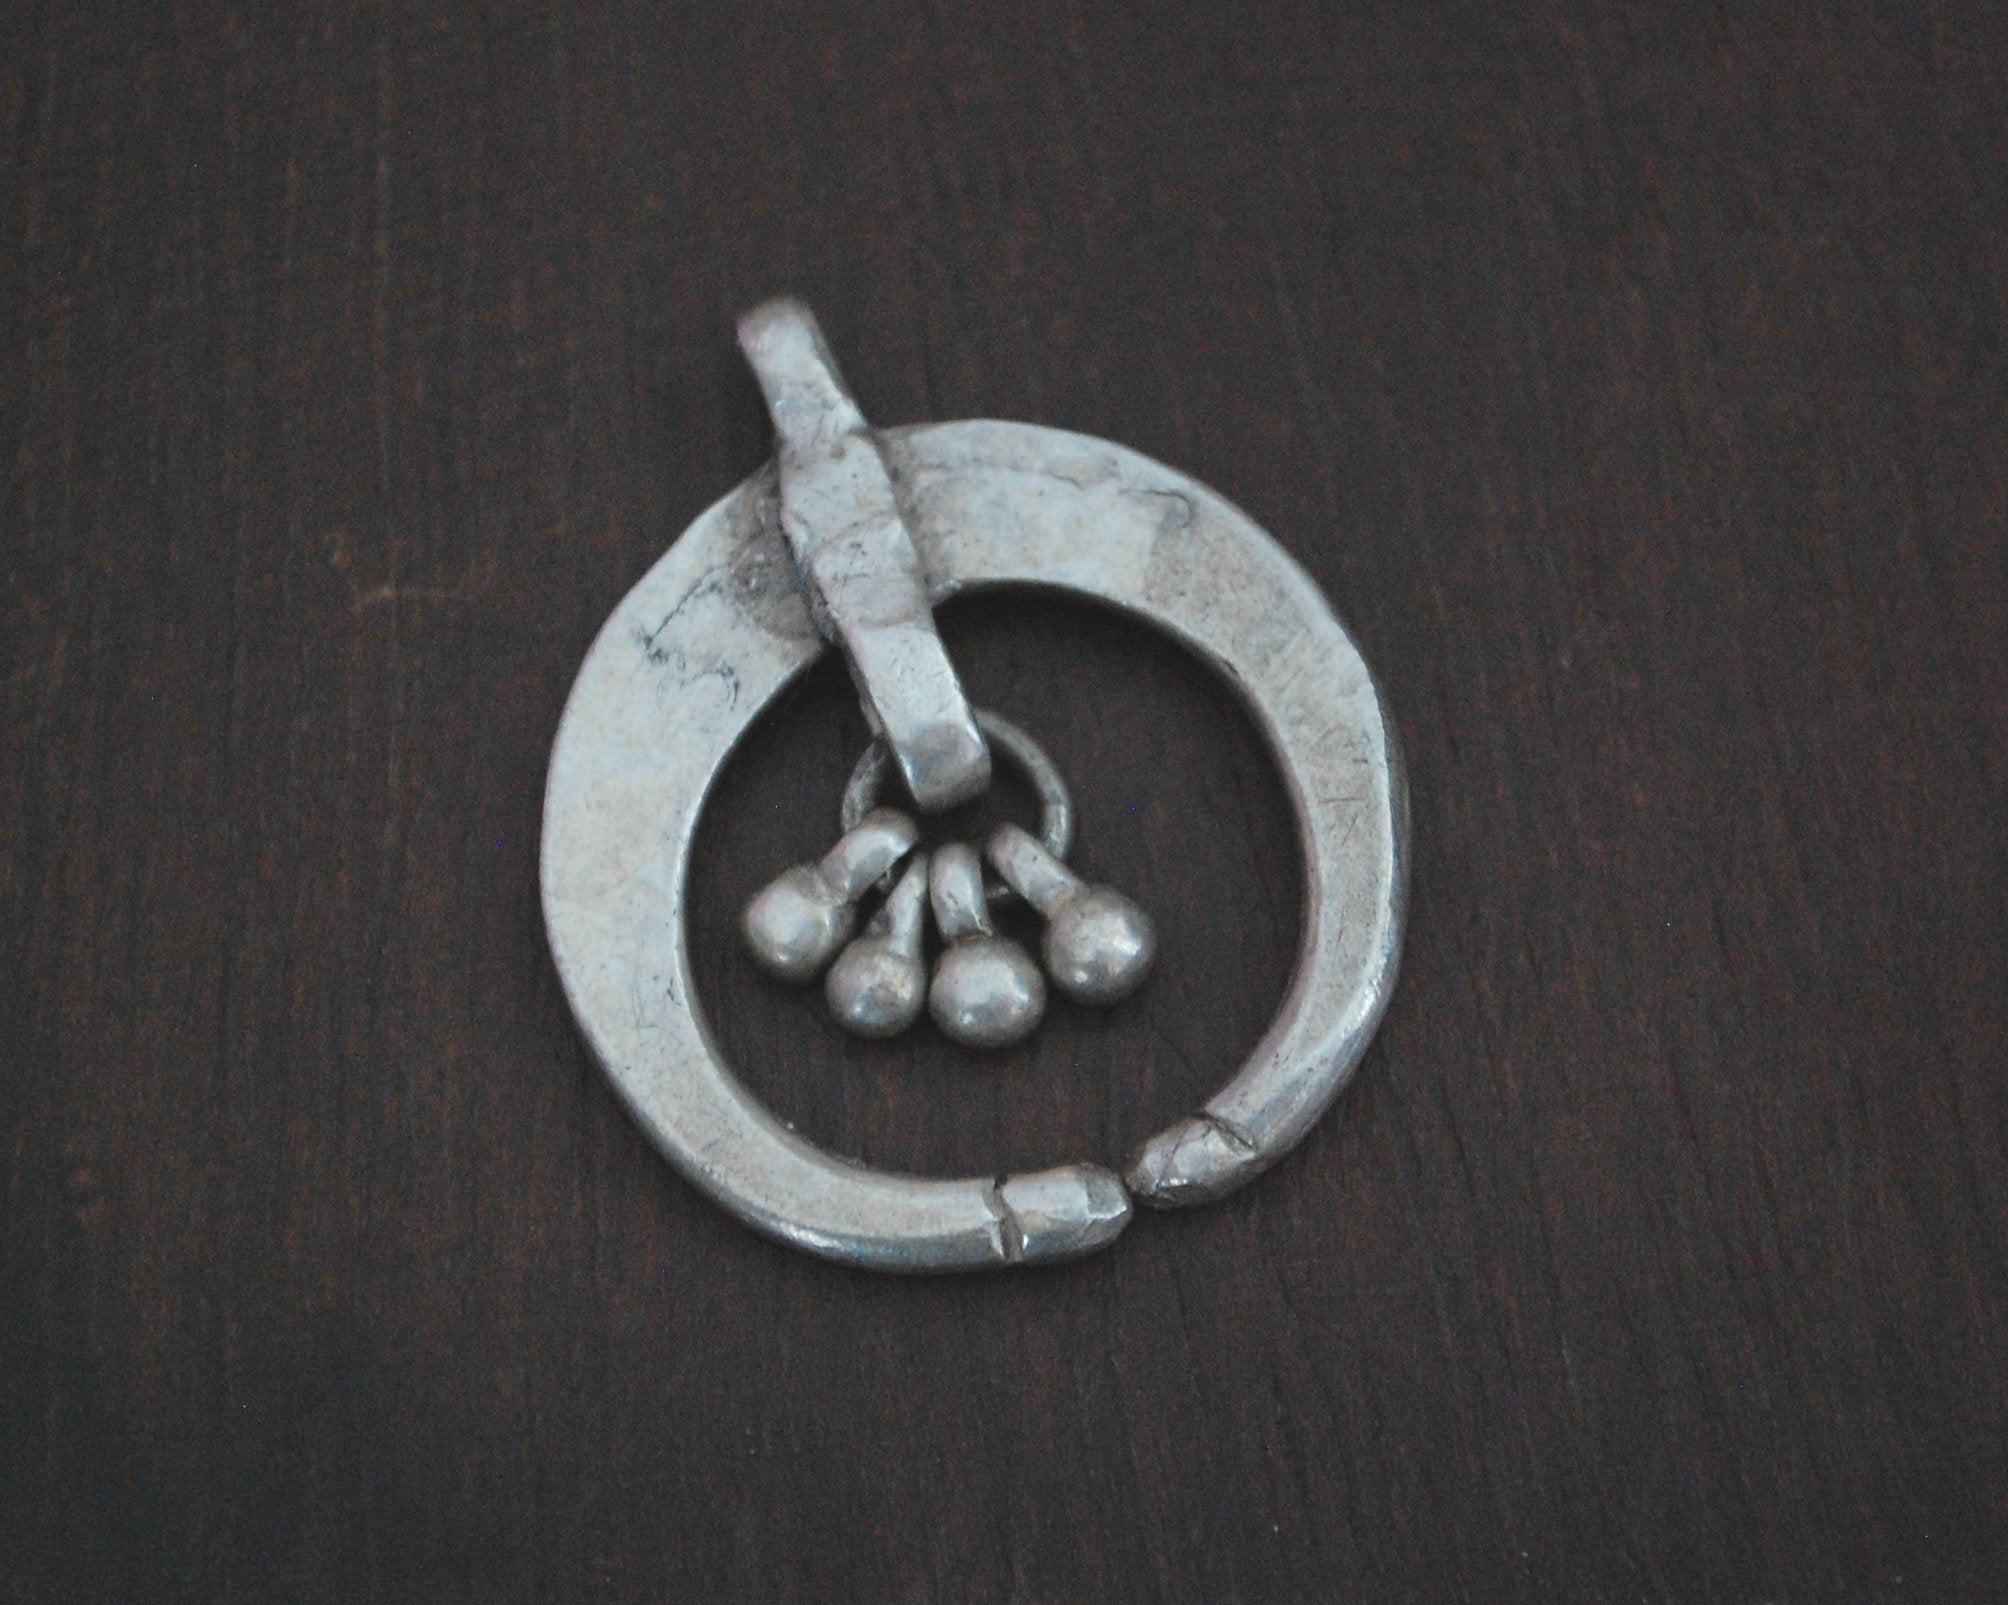 Rajasthani Crescent Moon Amulet Pendant